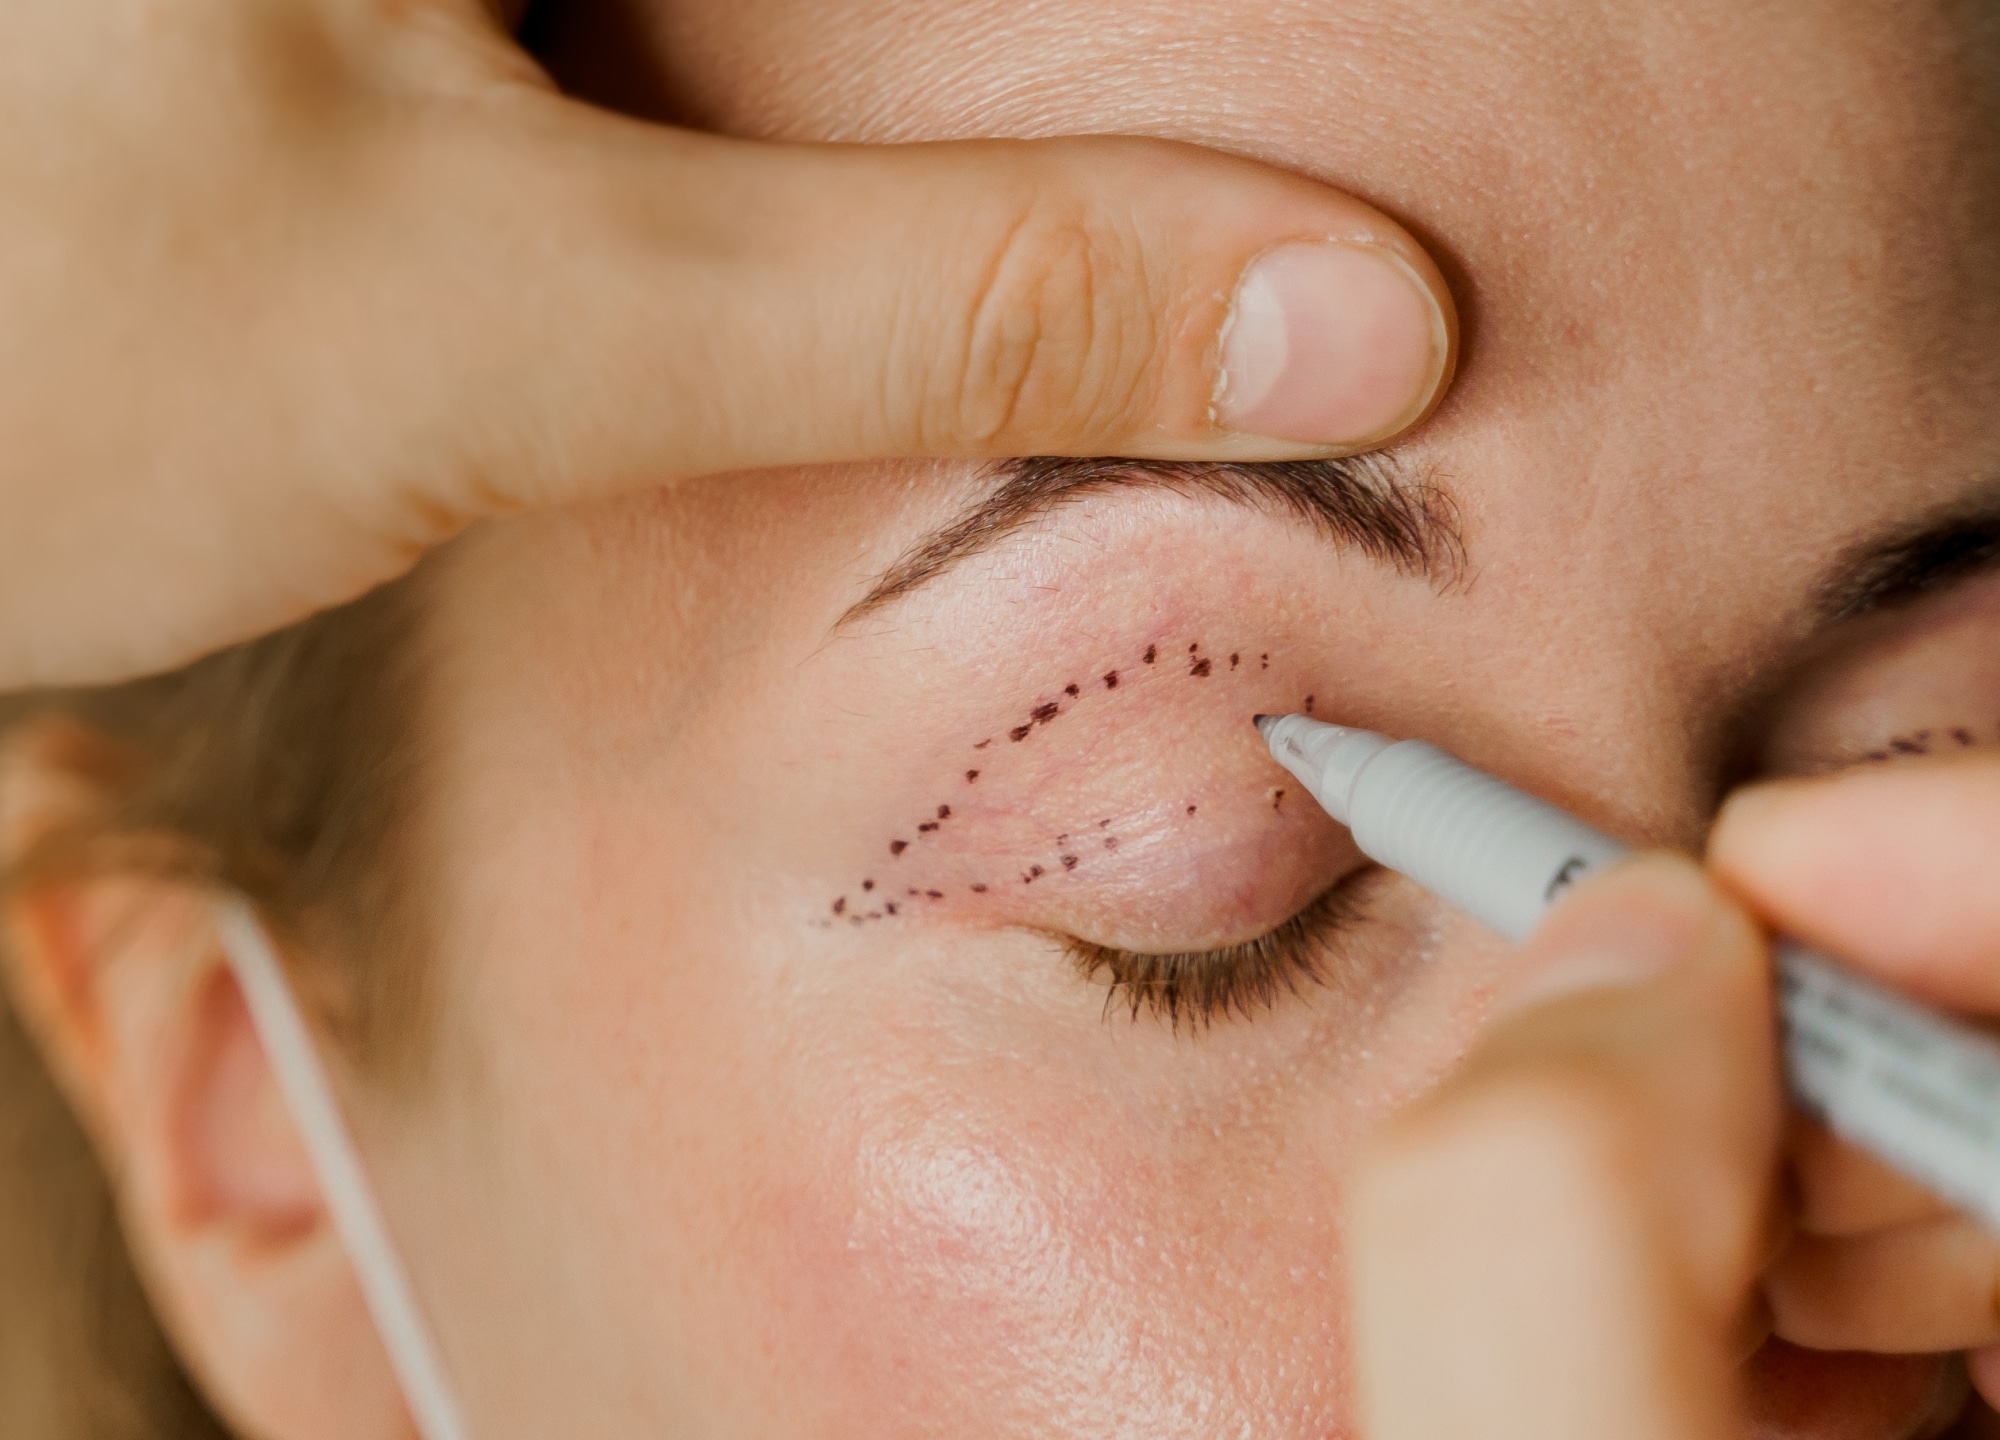 Eyelid surgery risks